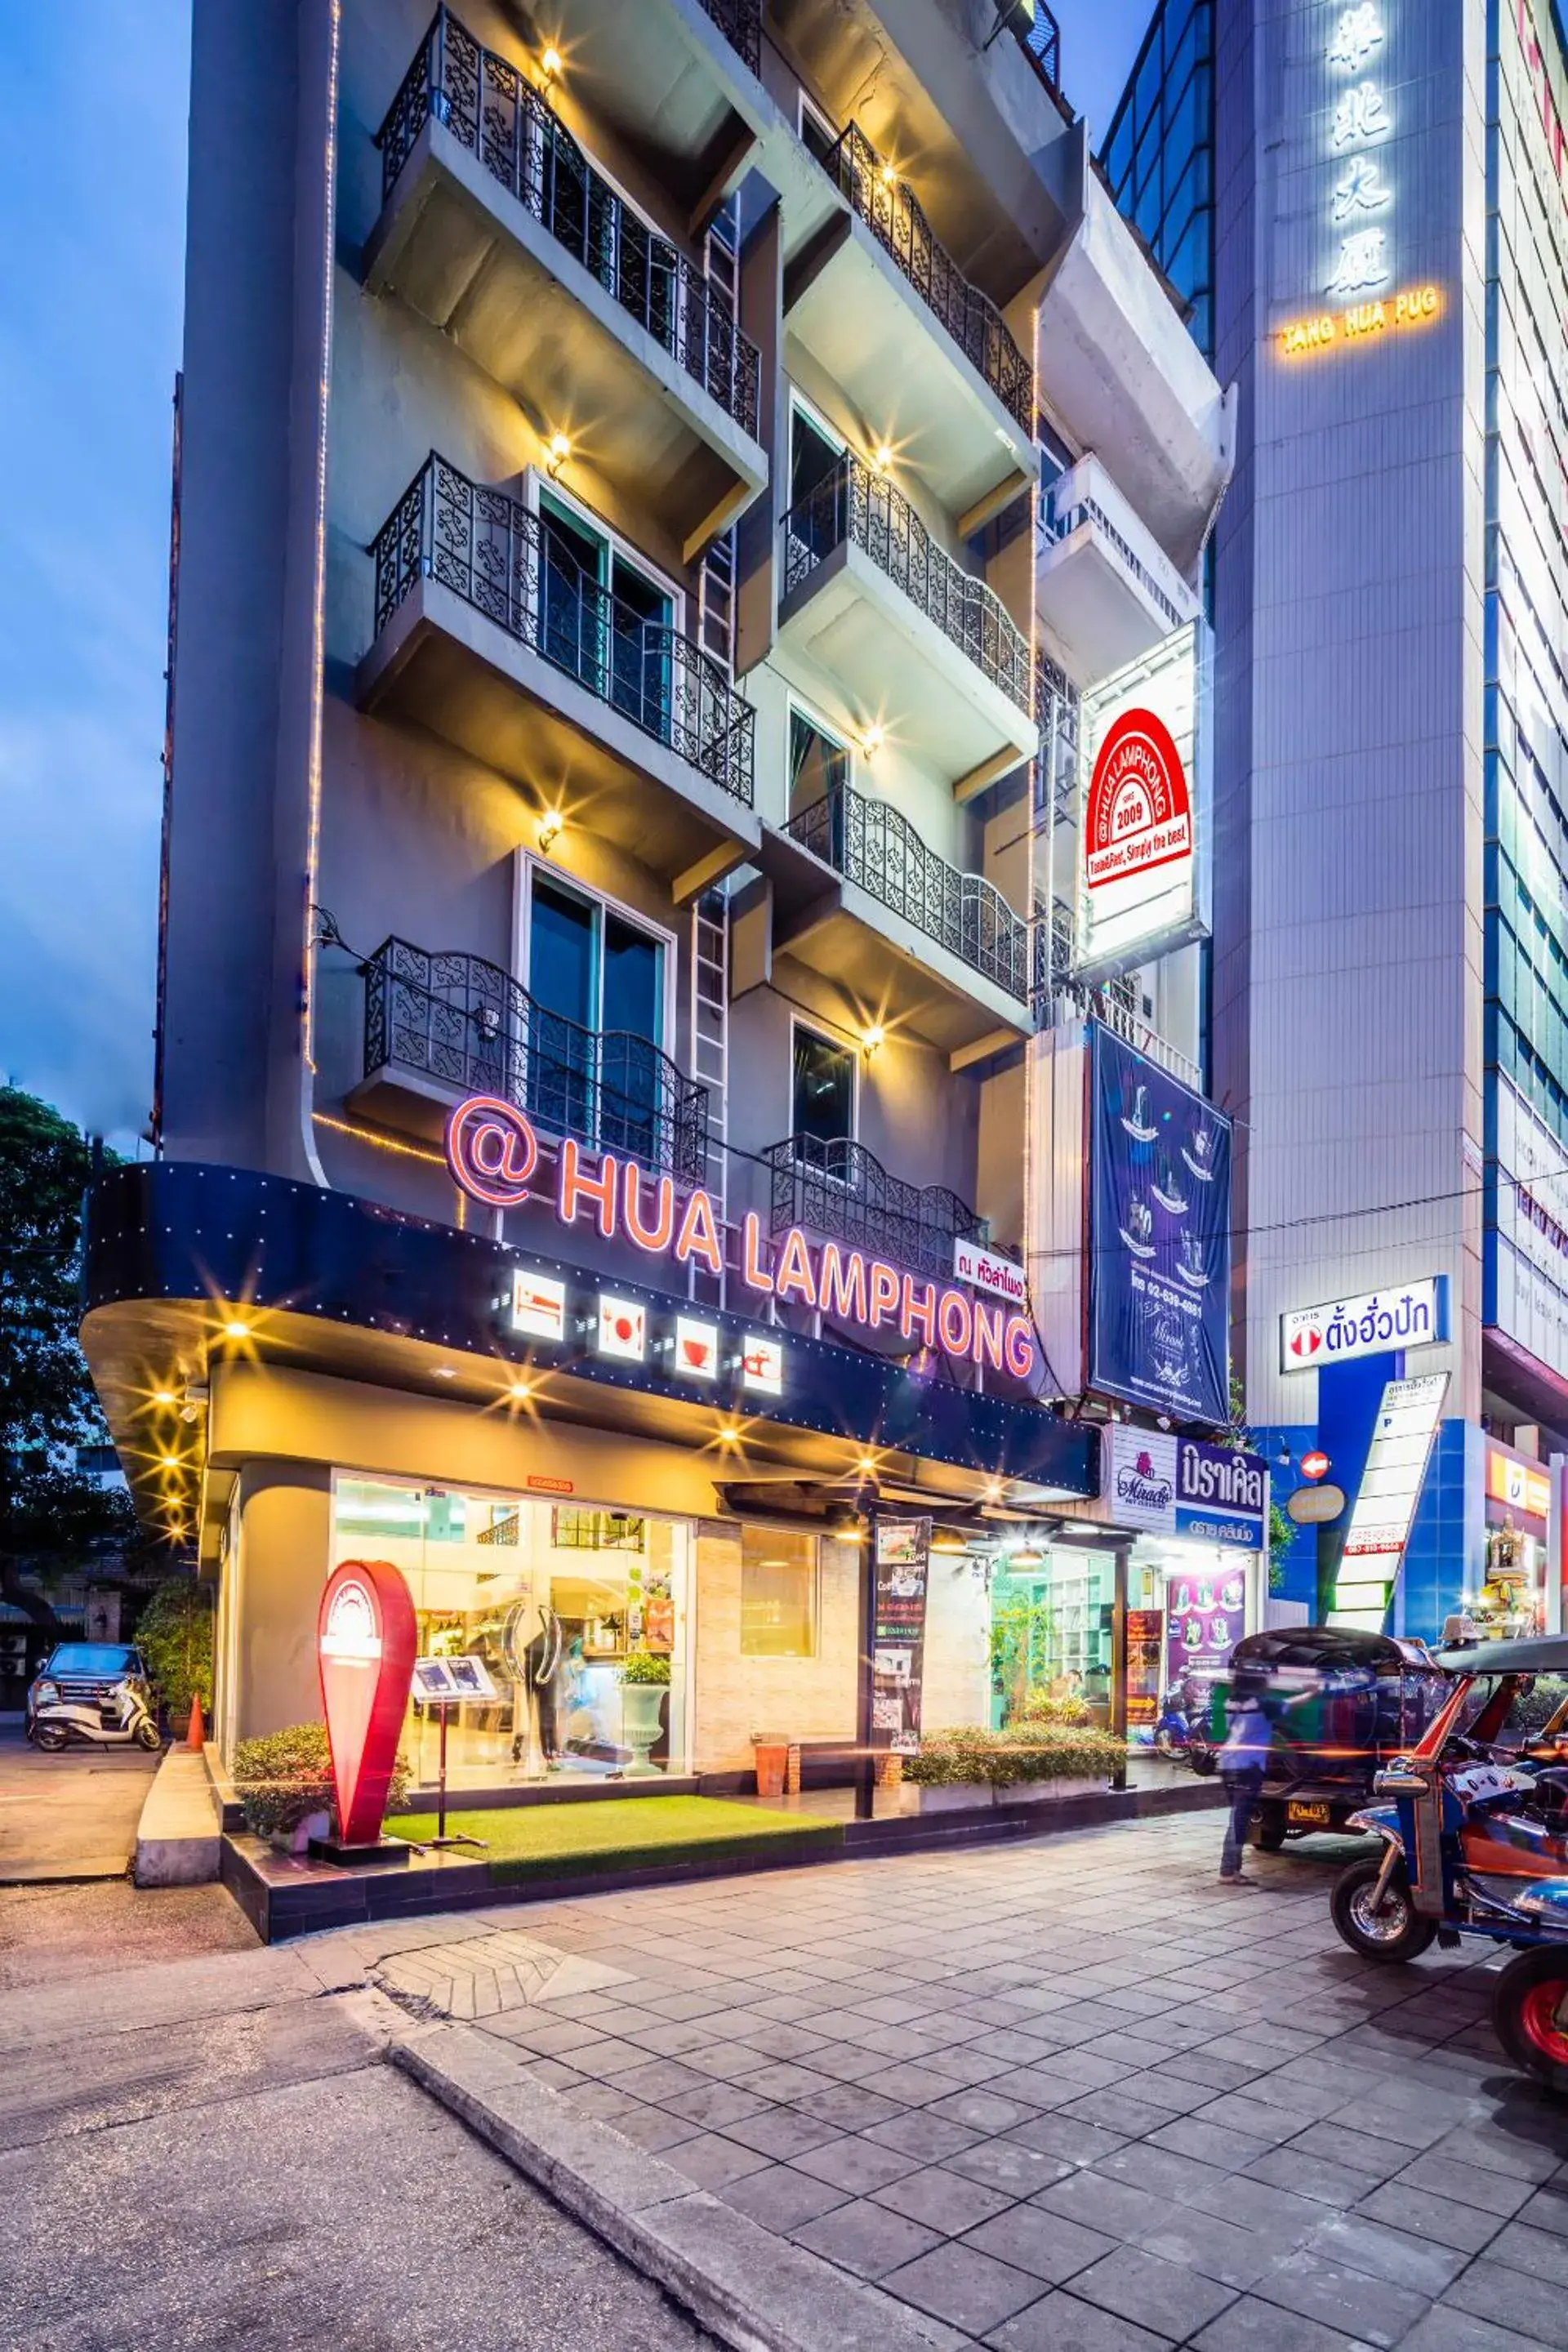 Property building, Facade/Entrance in At Hua Lamphong Hotel